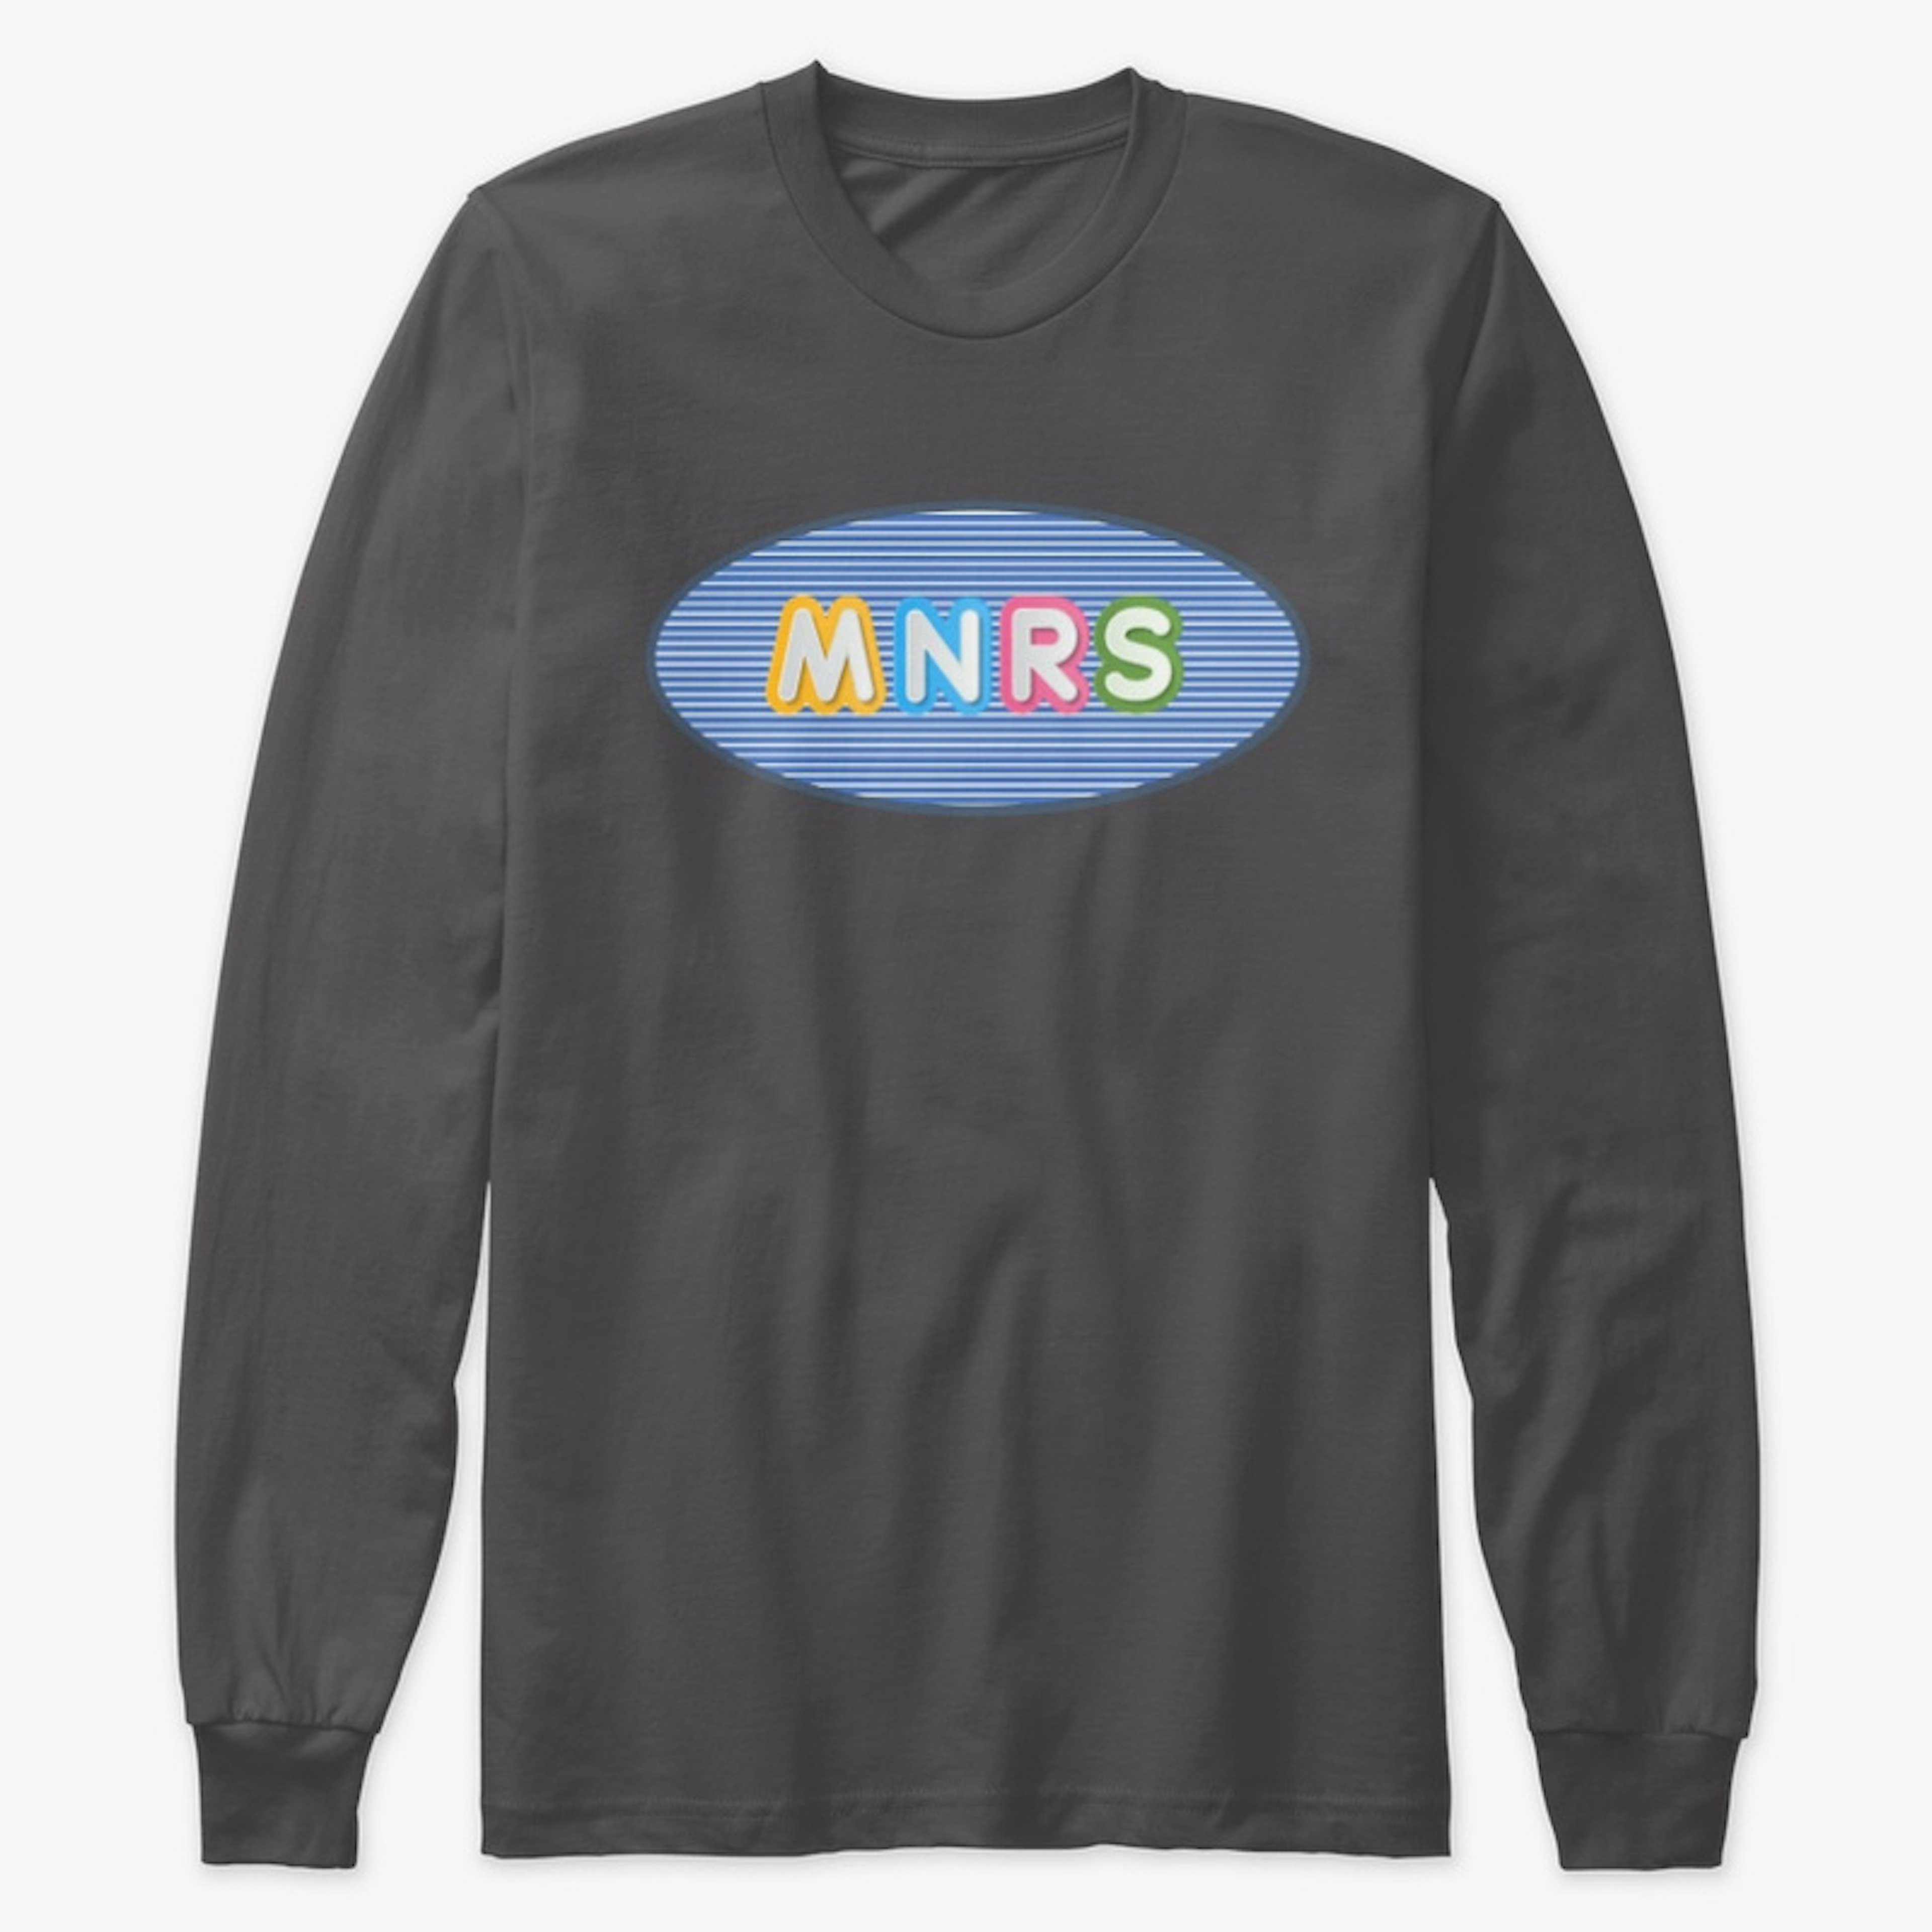 MNRS Shirts and Tanks